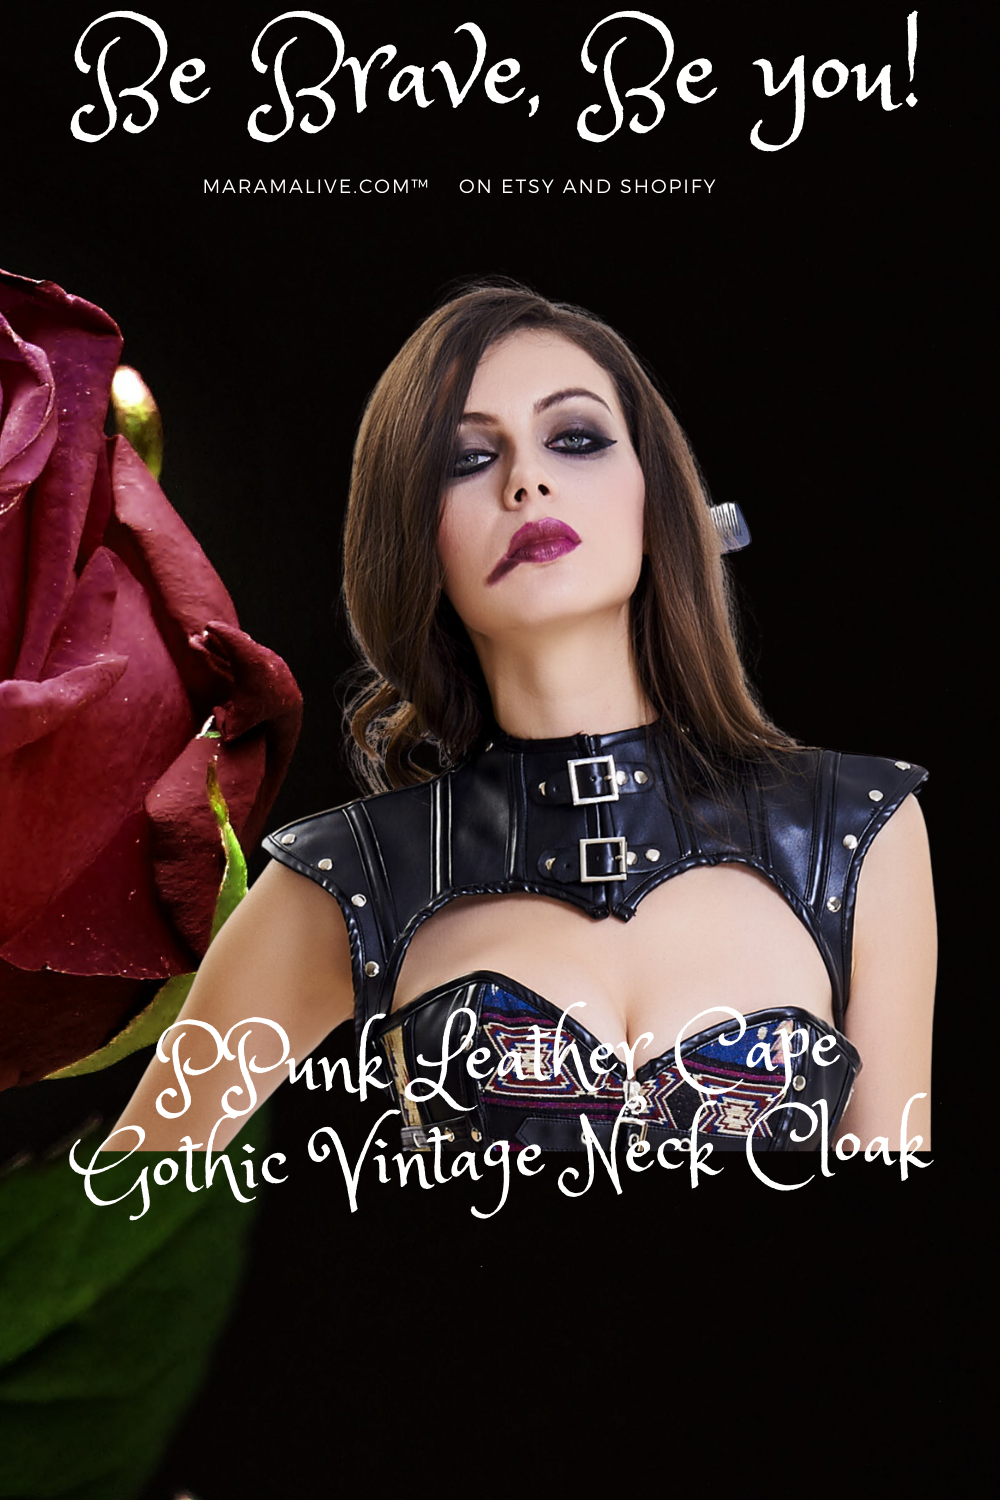 The Maramalive™ Punk Leather Neck Cape - Gothic Vintage Neck Cloak exudes a punk and gothic aesthetic.